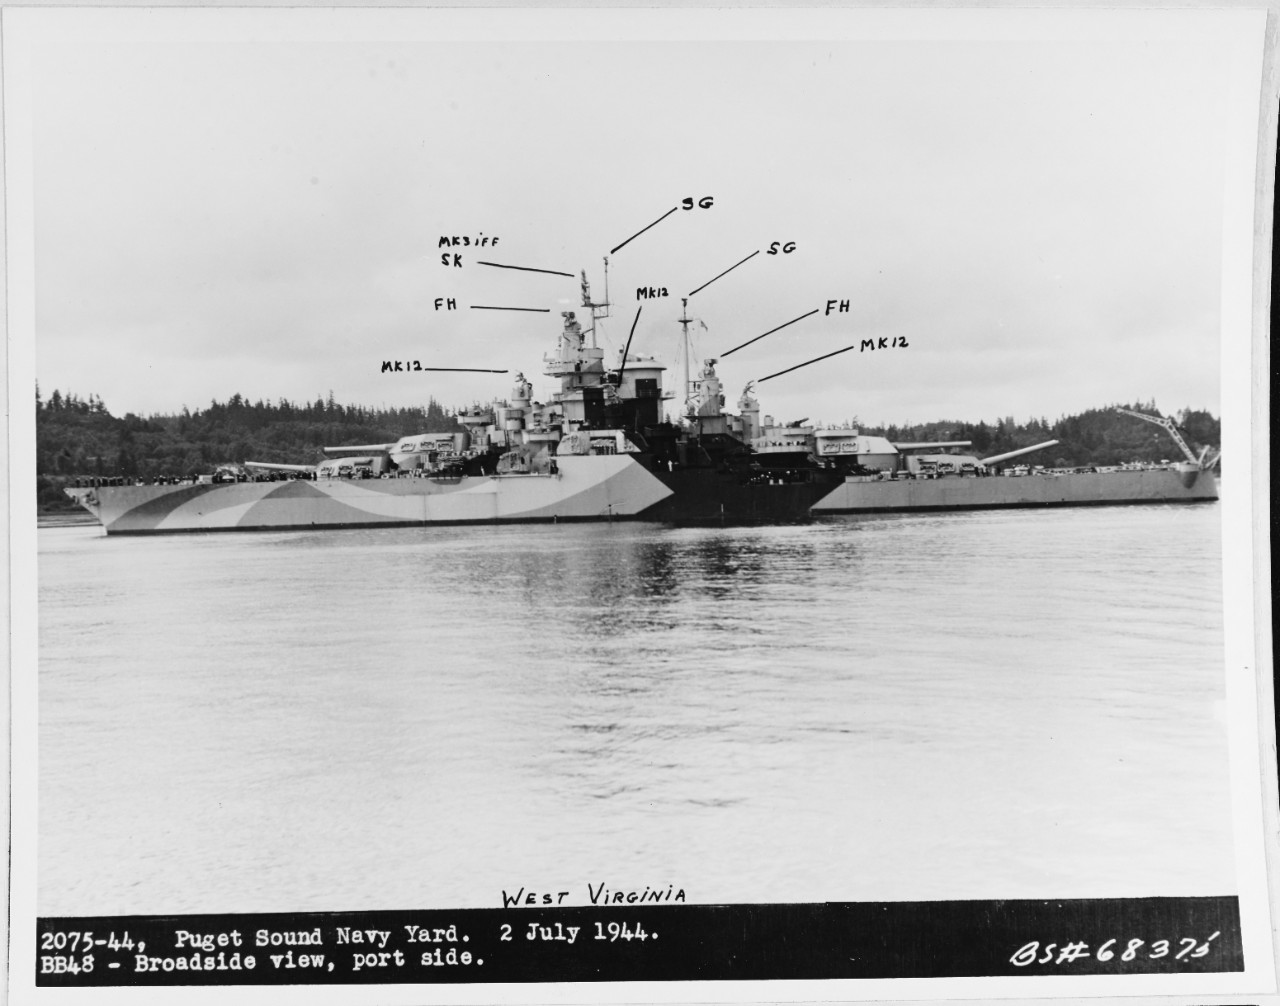 USS WEST VIRGINIA (BB-48)